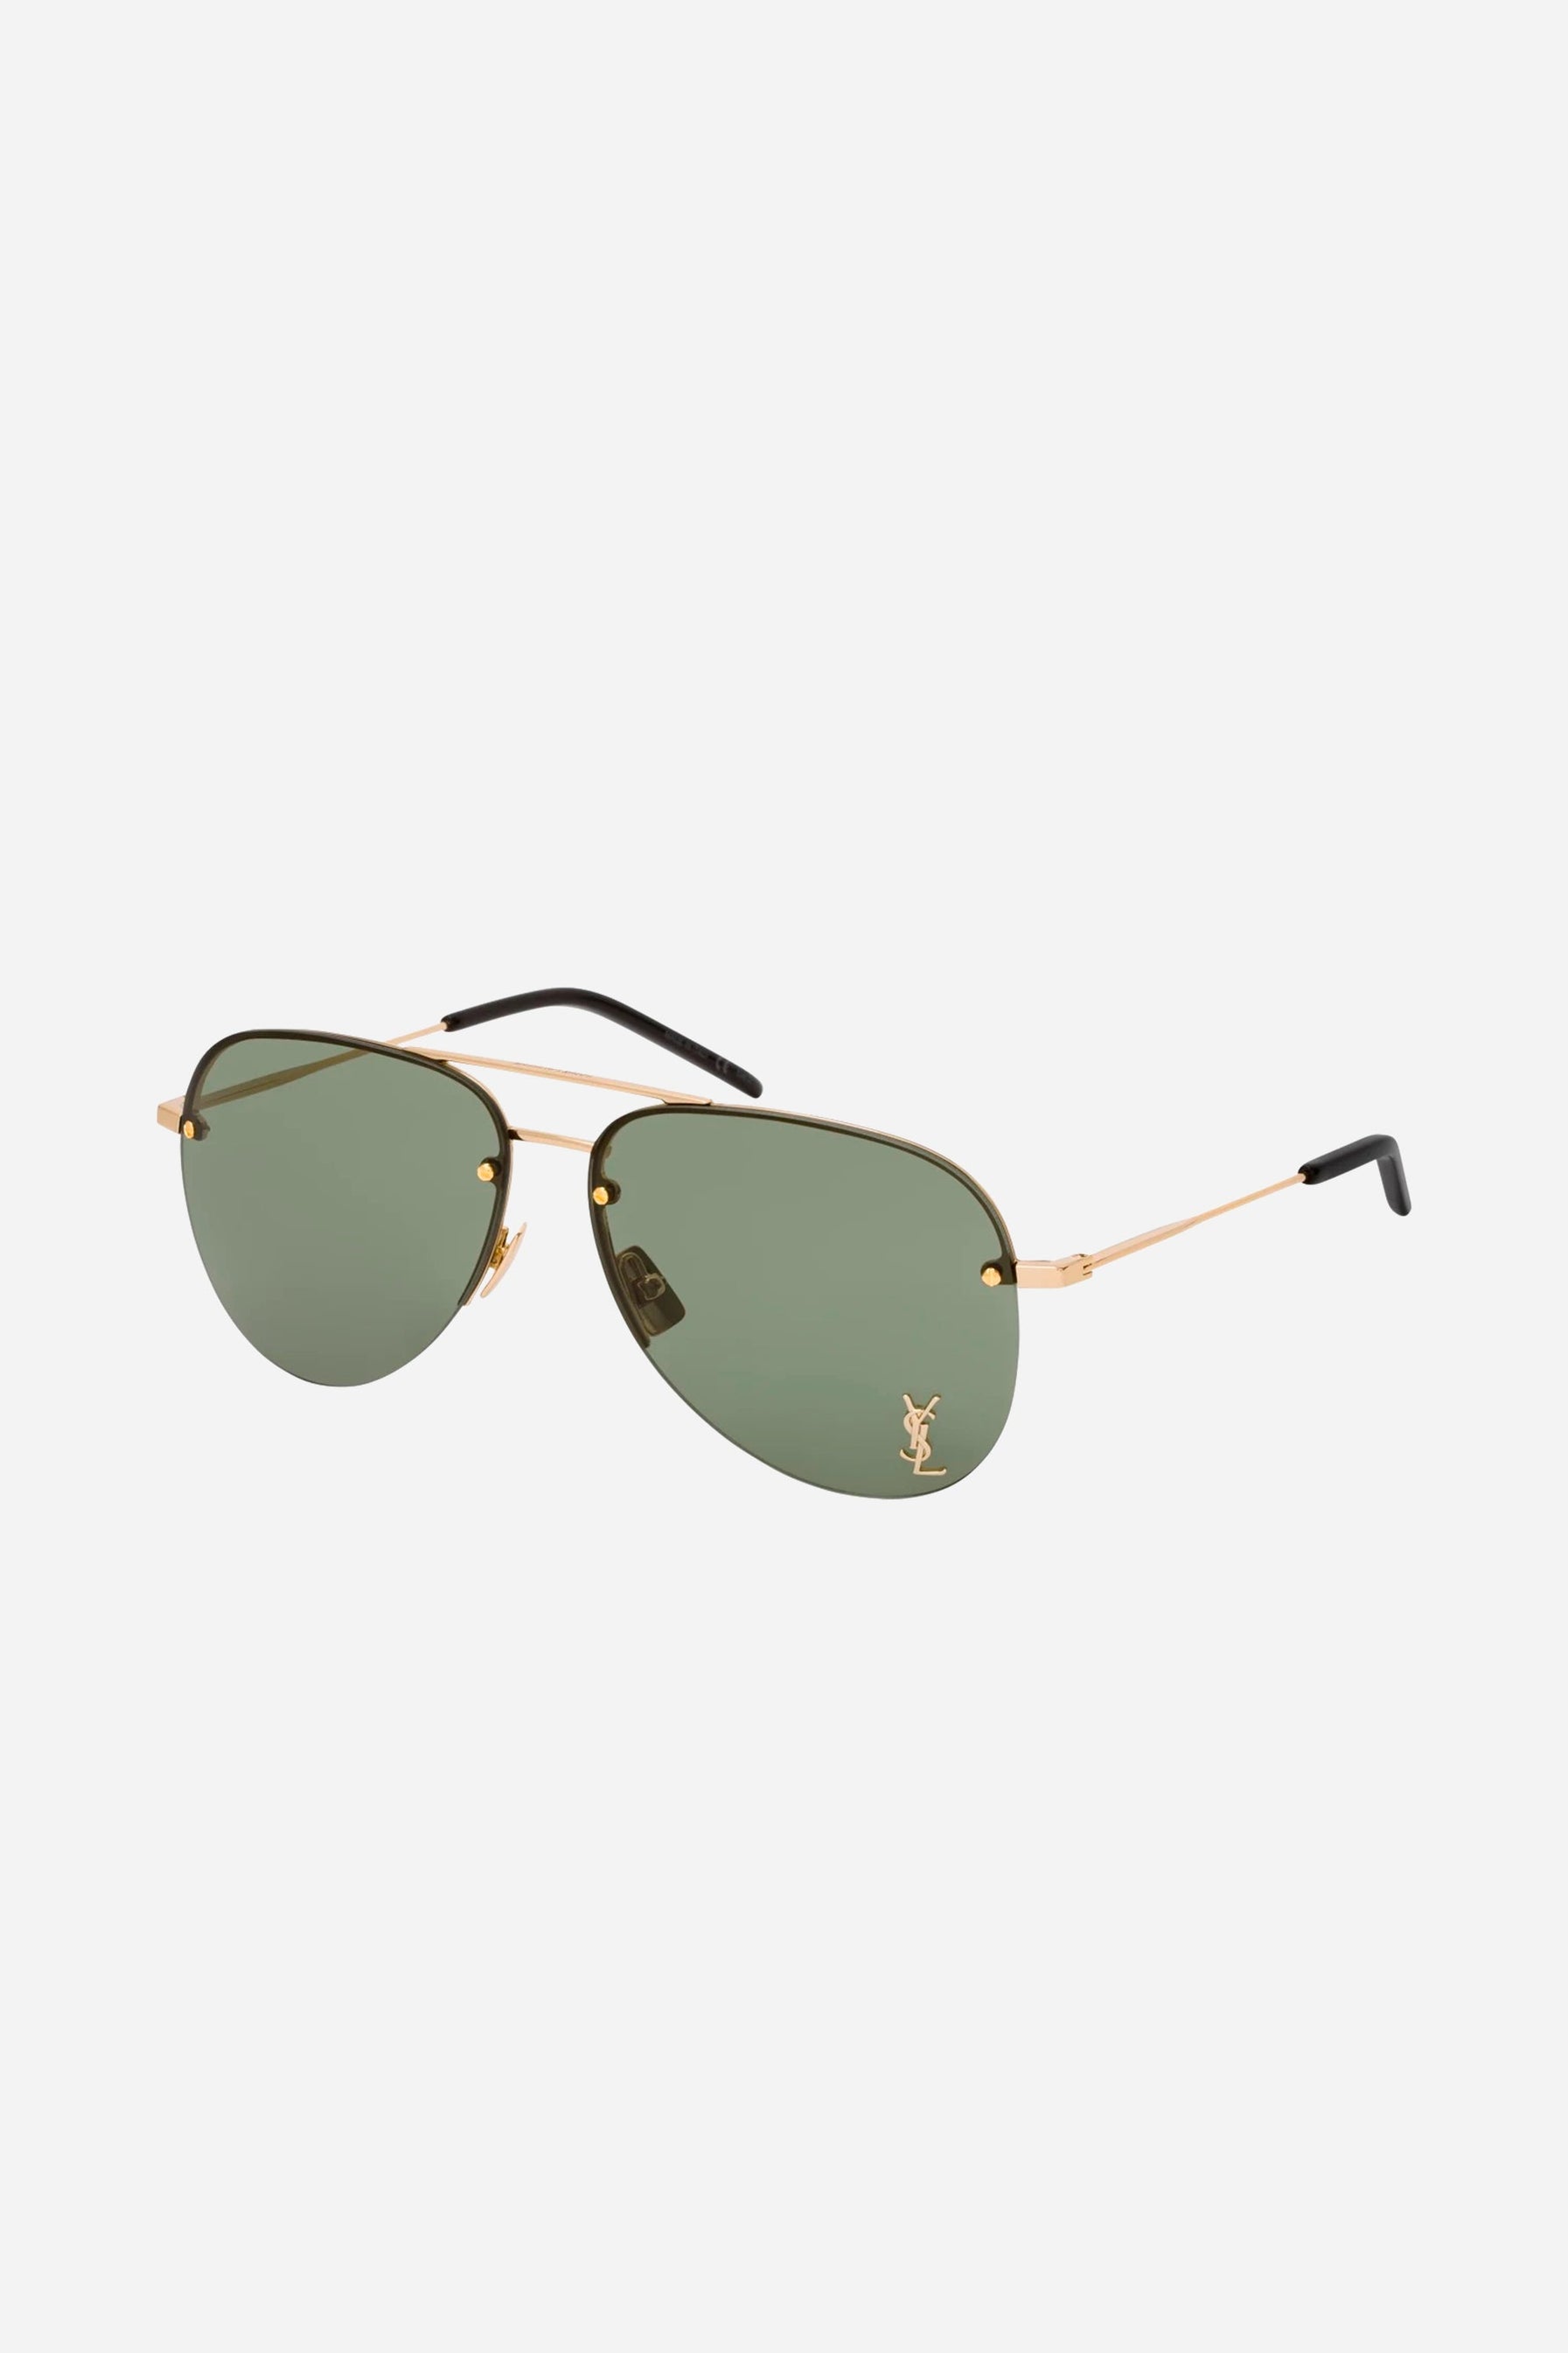 Saint Laurent pilot gradient green lenses sunglasses - Eyewear Club